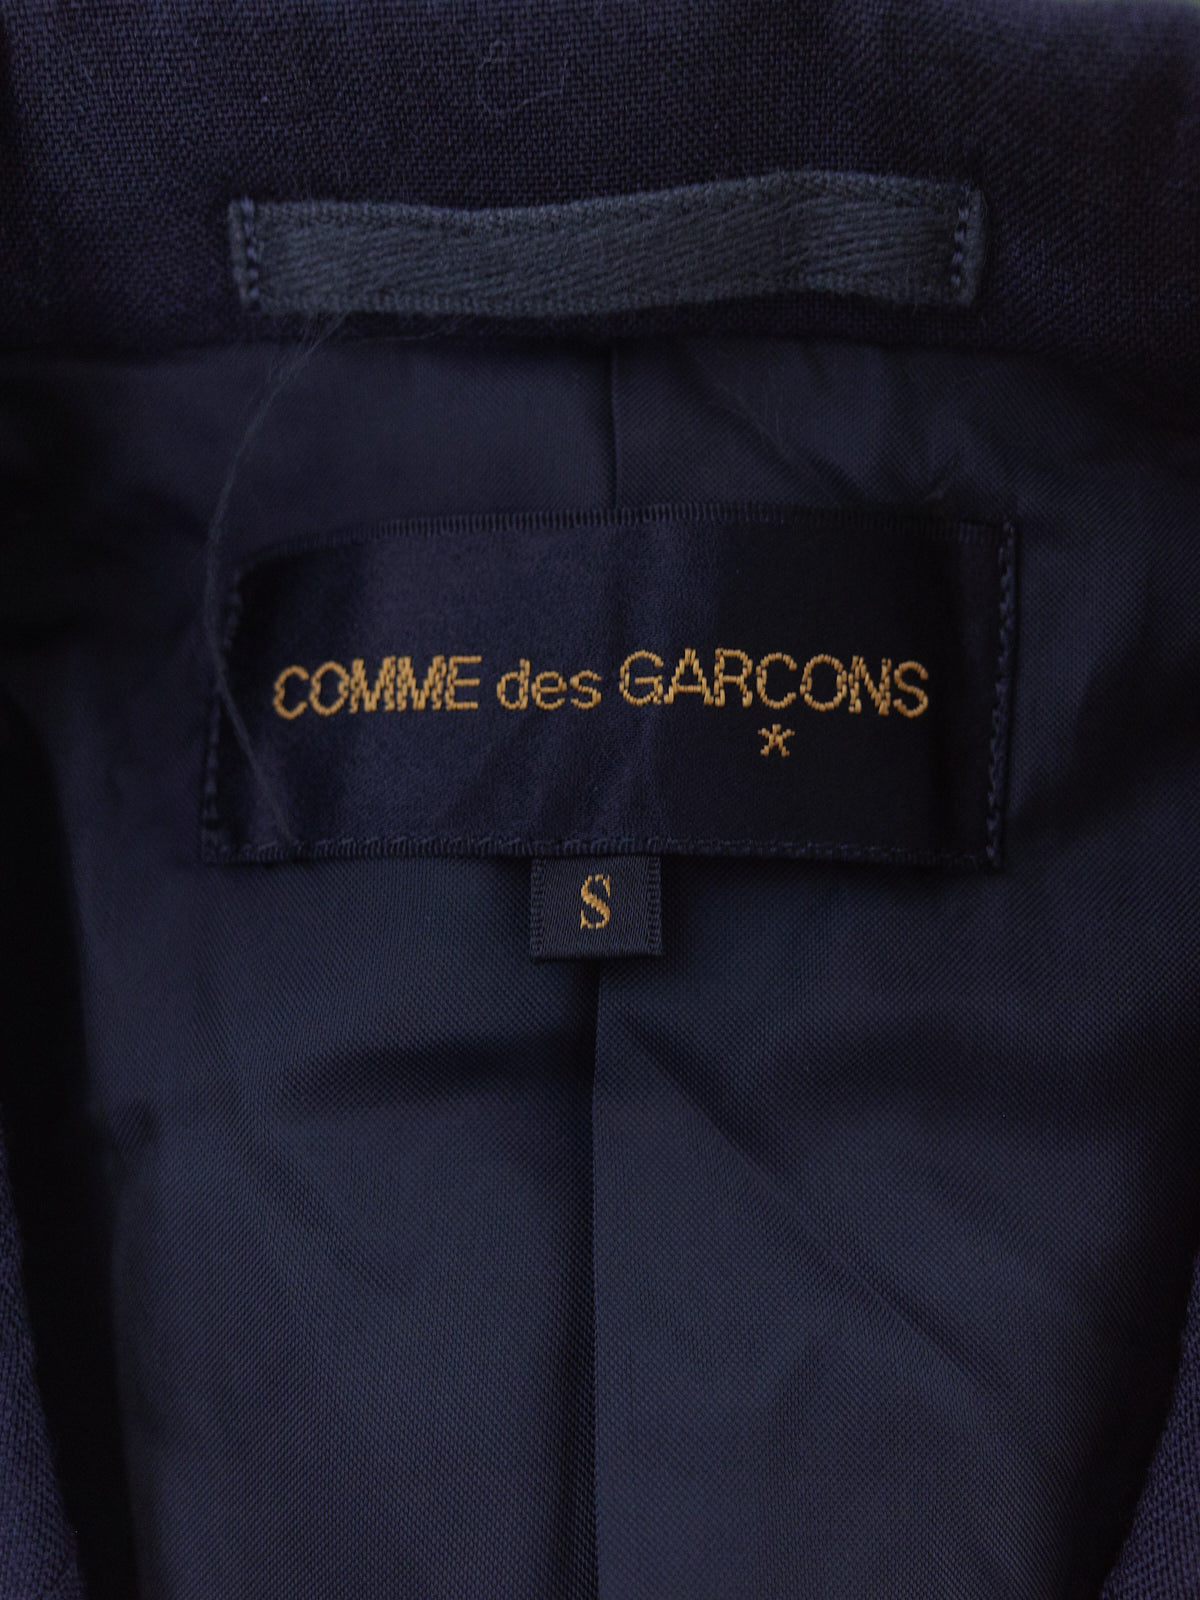 Comme des Garcons AW1993 "Synergy" navy wool hem rib 5 button blazer - womens S